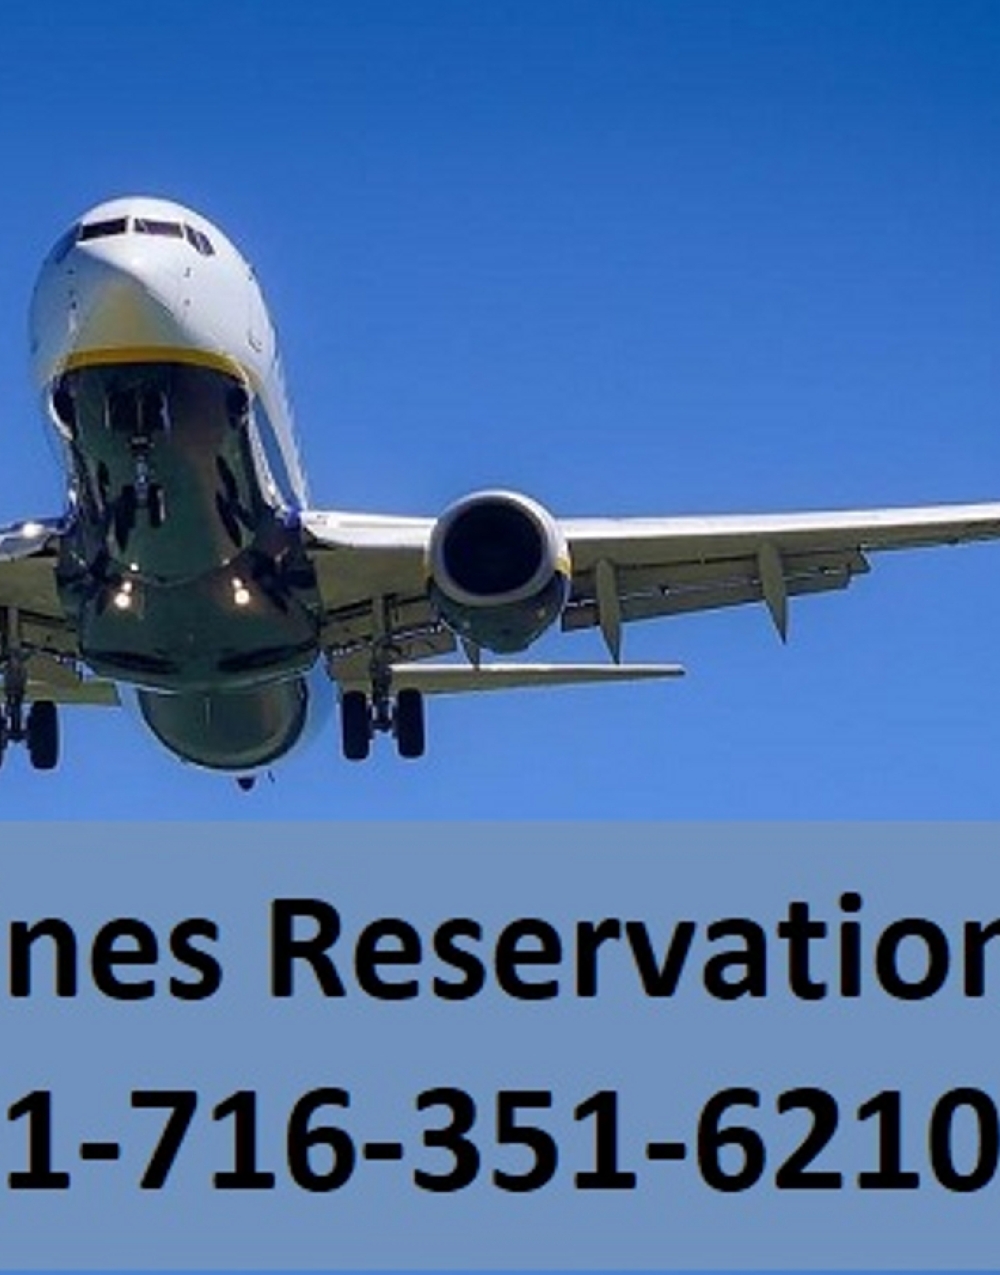 Delta Airlines New Reservation〔1((716)351-62-10 〕Number